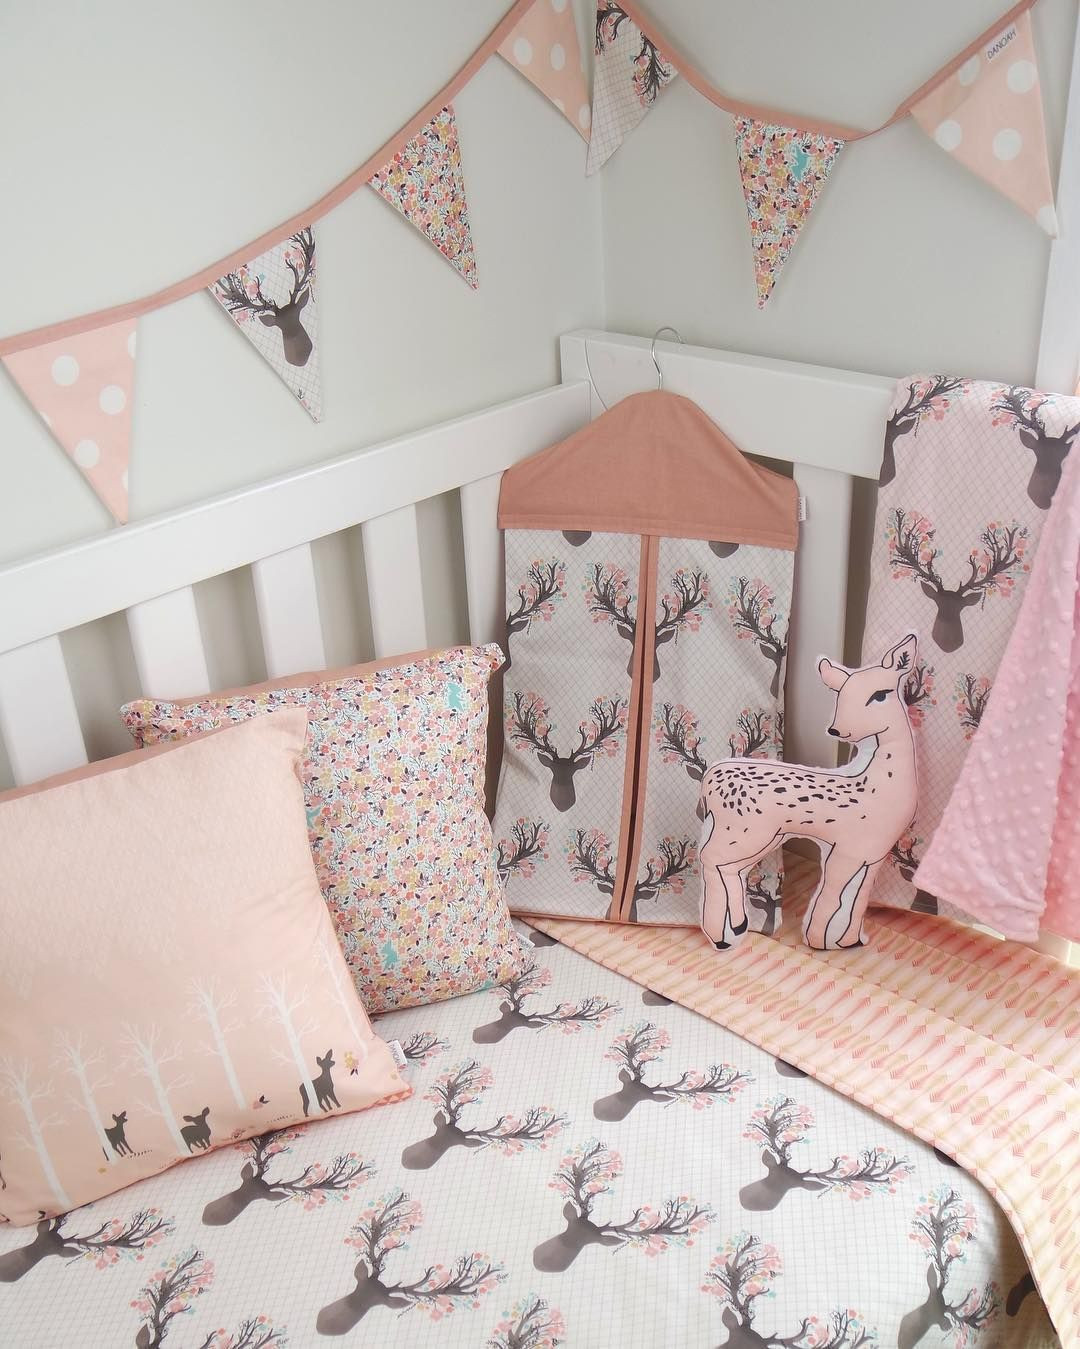 Baby Room Deer Decor
 Pink Deer Nursery set by danoah baby featuring fawn